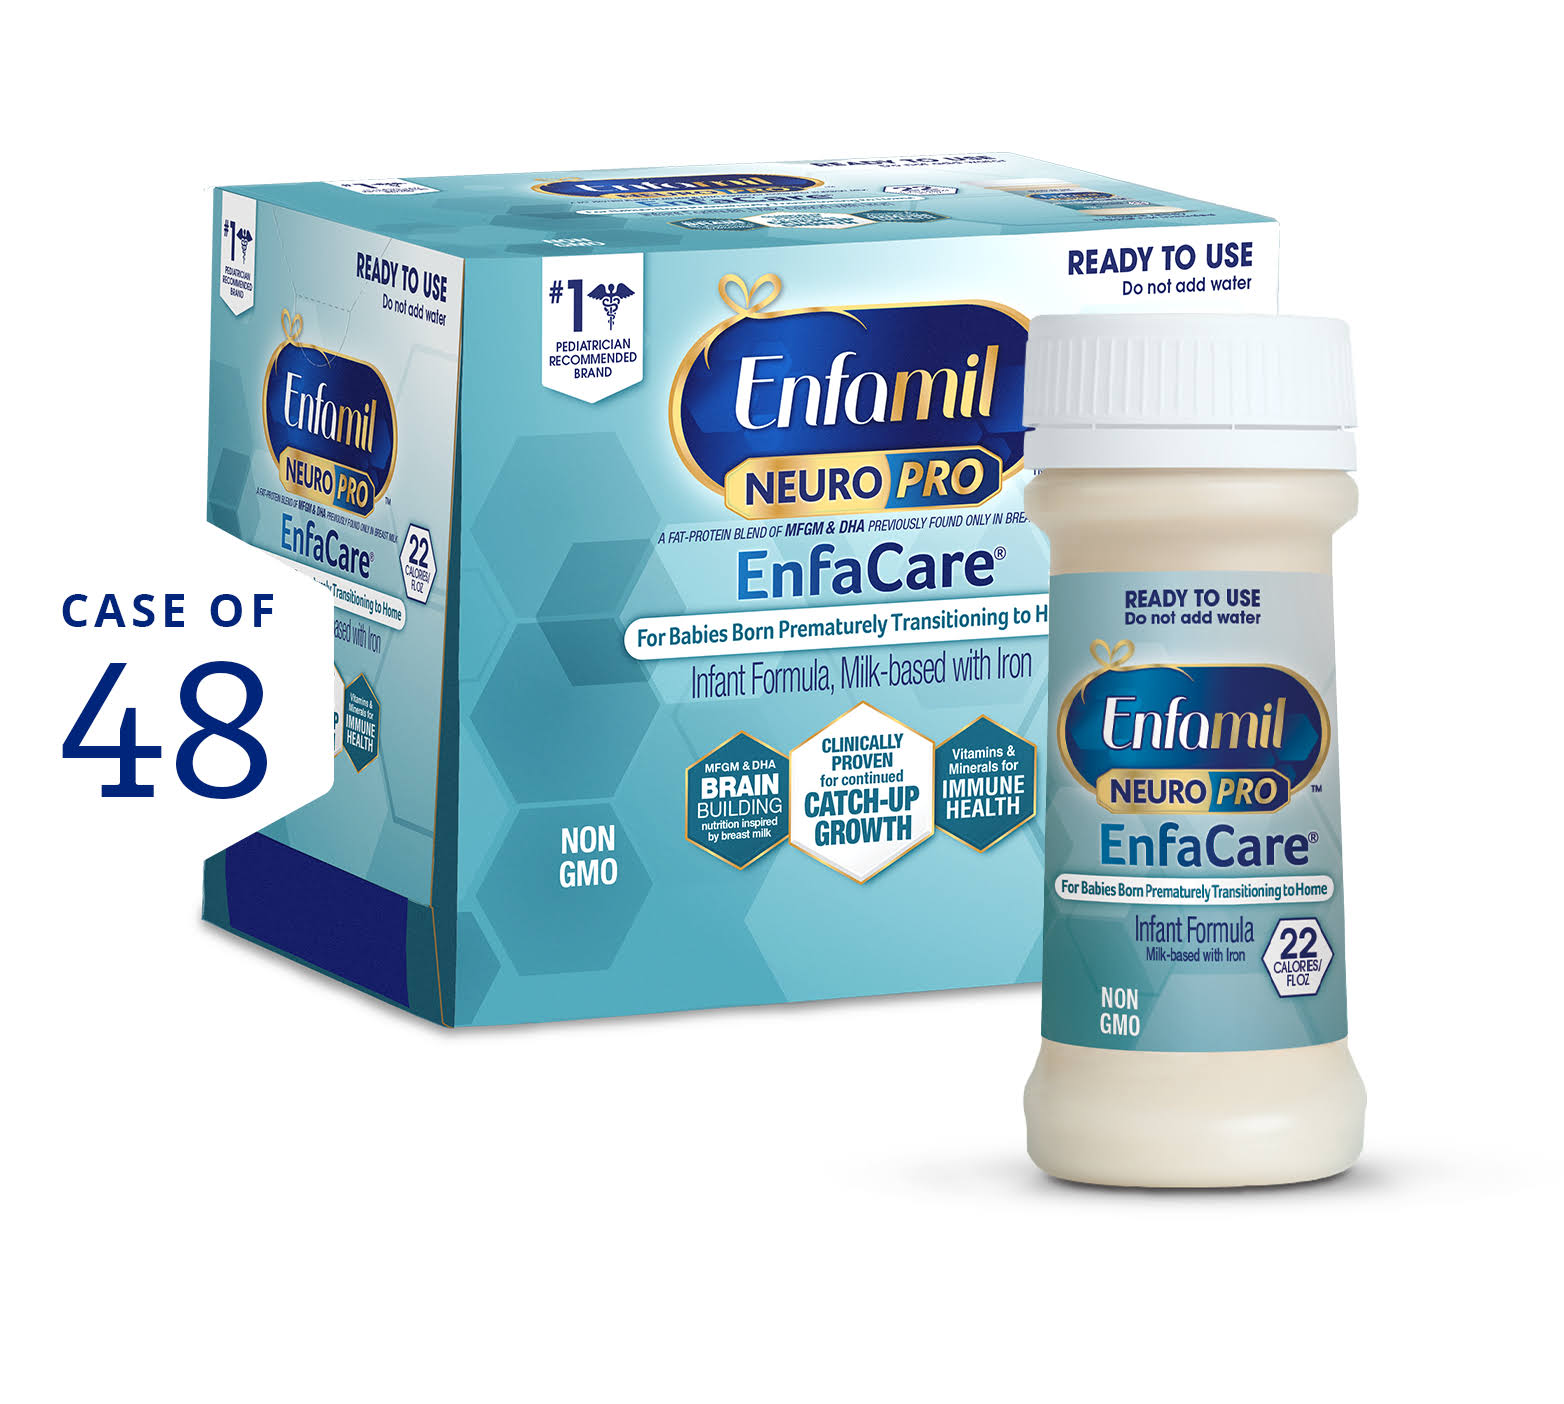 Enfamil NeuroPro EnfaCare Premature Baby Formula Milk Based W/ Iron Ready To Use Bottles MFGM, Omega 3 DHA, 22 CAL, Immune Support & Brain